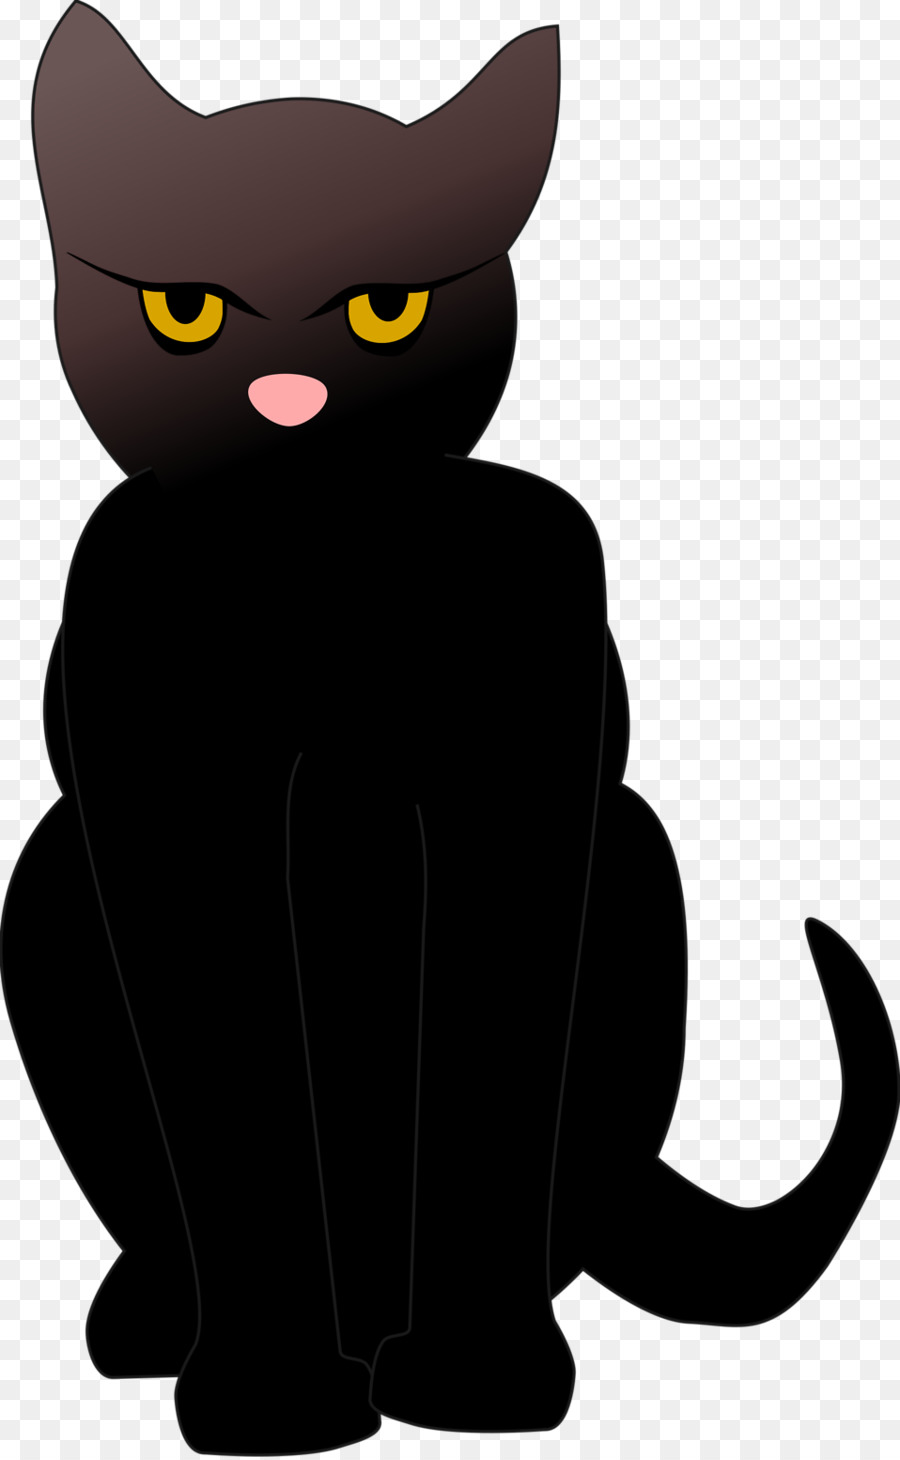 Egyptian Mau Sphynx cat Abyssinian Black cat Clip art - Cat Cliparts Transparent png download - 958*1551 - Free Transparent Egyptian Mau png Download.